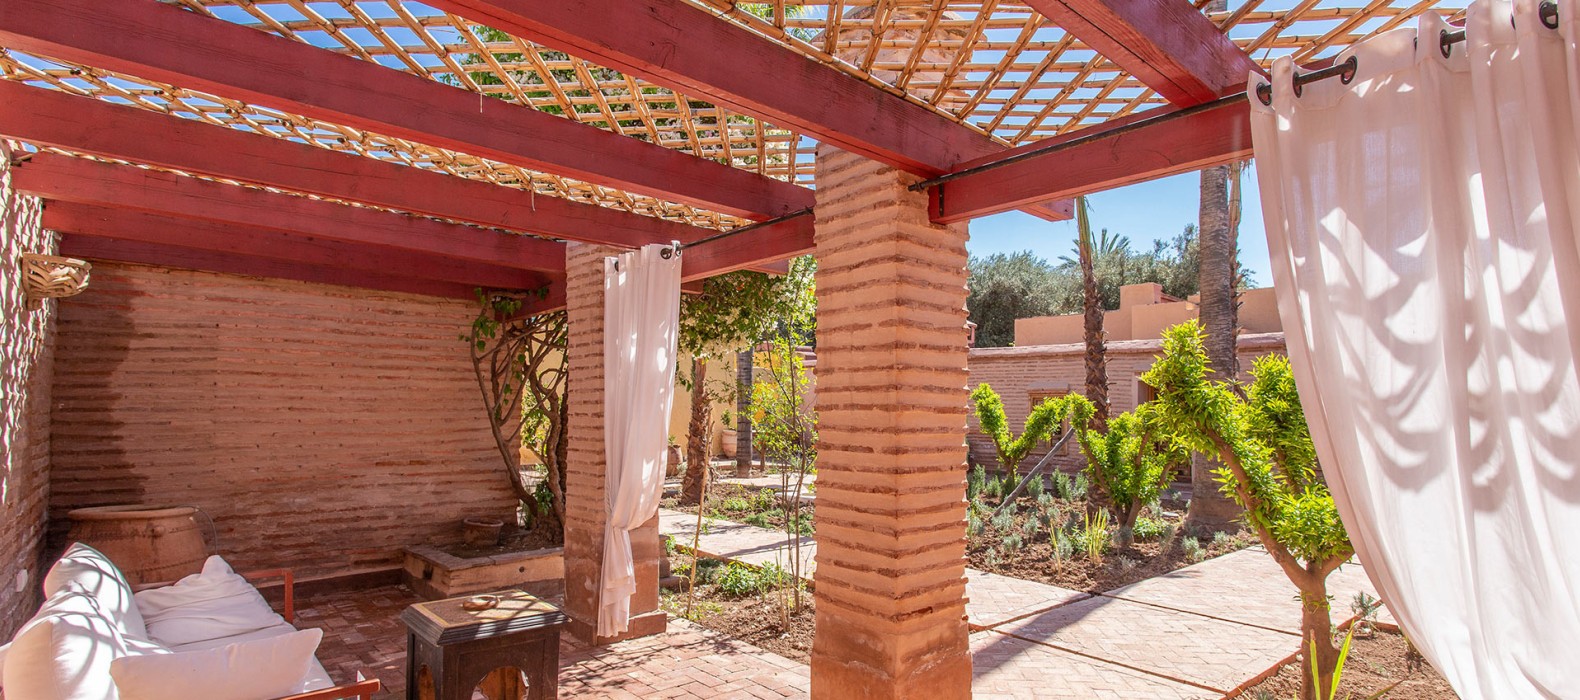 Exterior chill area view of Villa Les Almohades in Marrakech